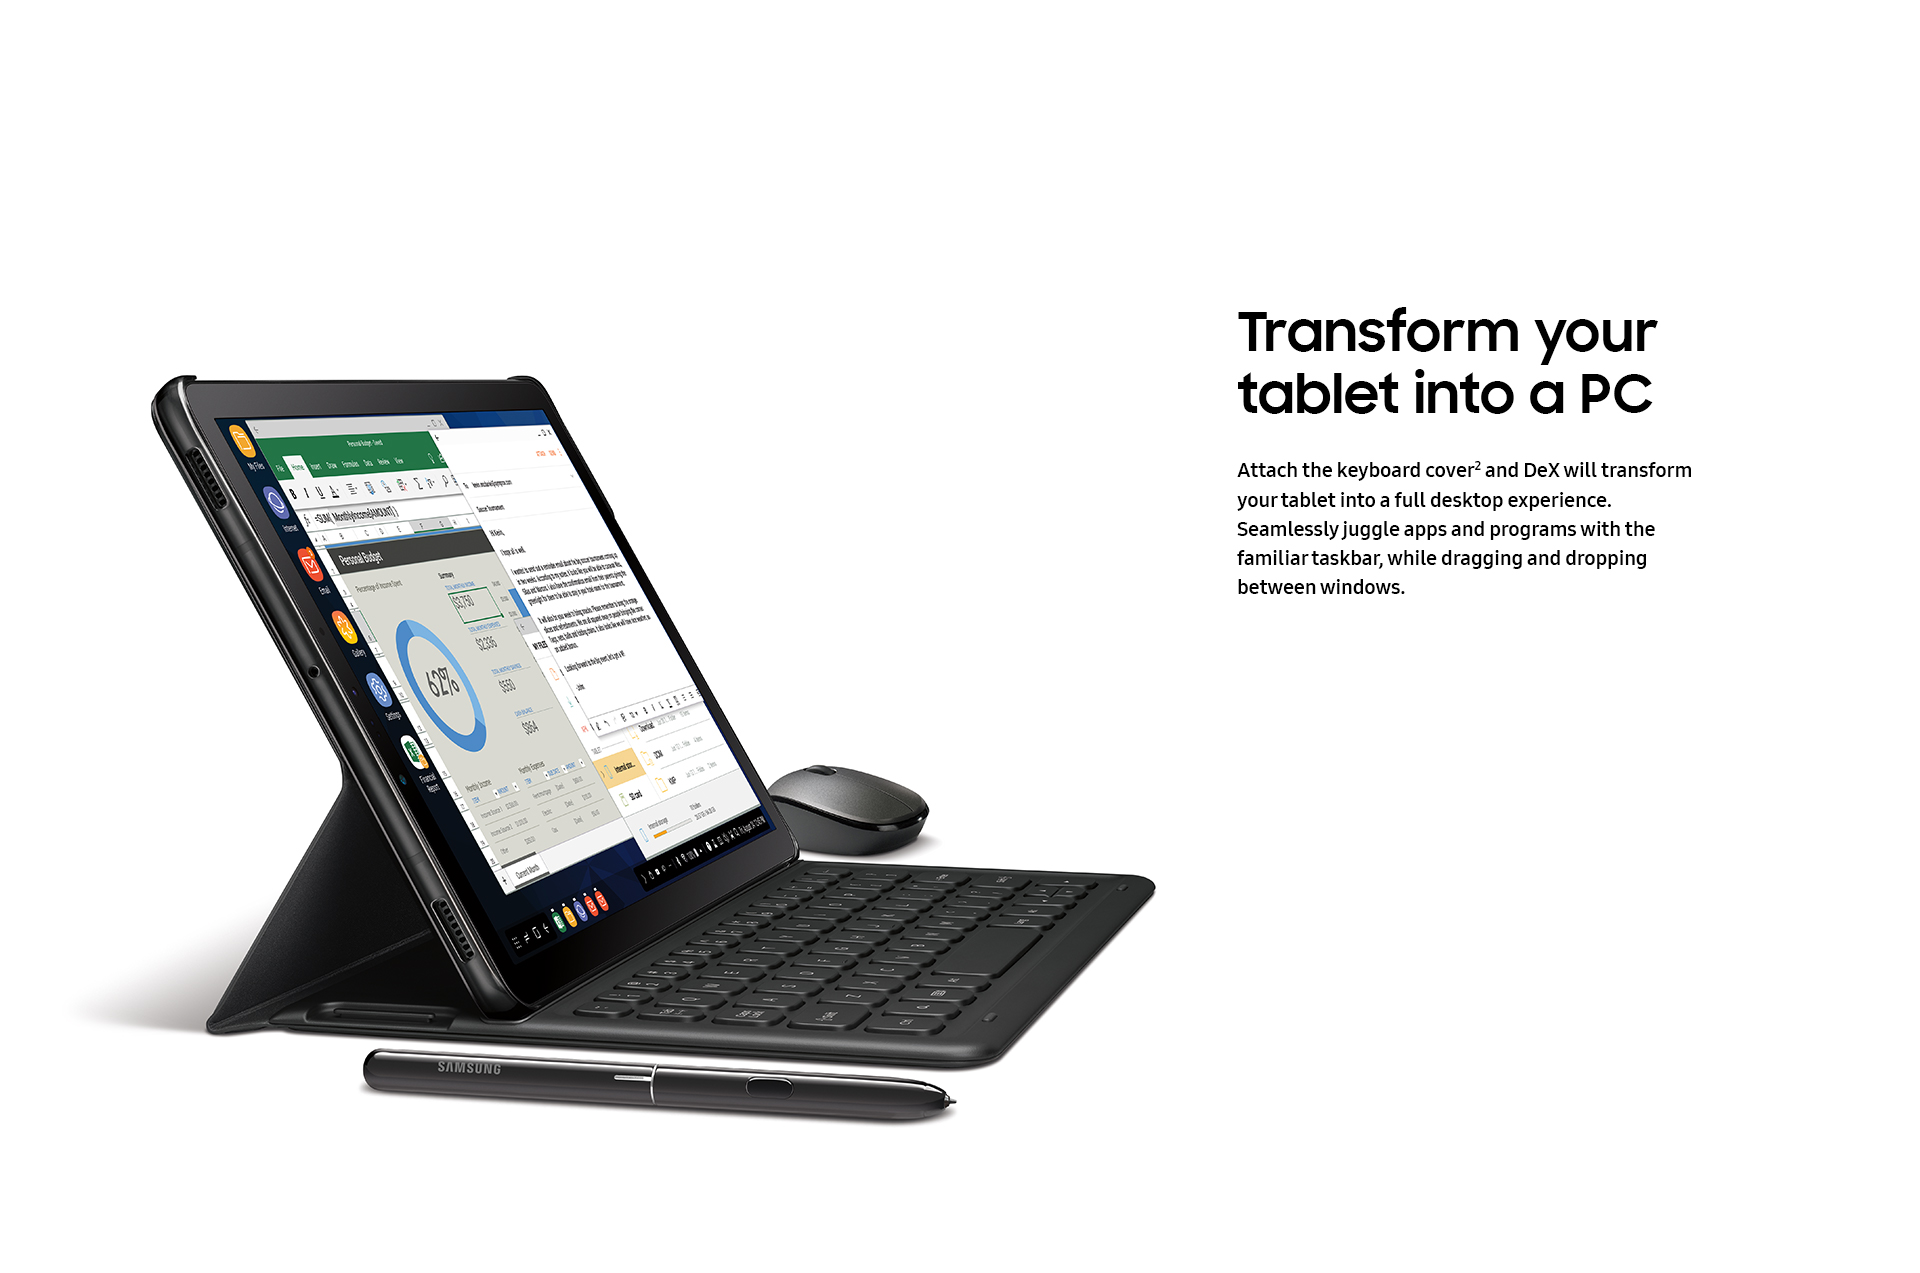 SAMSUNG Galaxy Tab S4 10.5" 256GB WiFi Tablet with S Pen, Black - SM-T830NZKLXAR - image 3 of 22